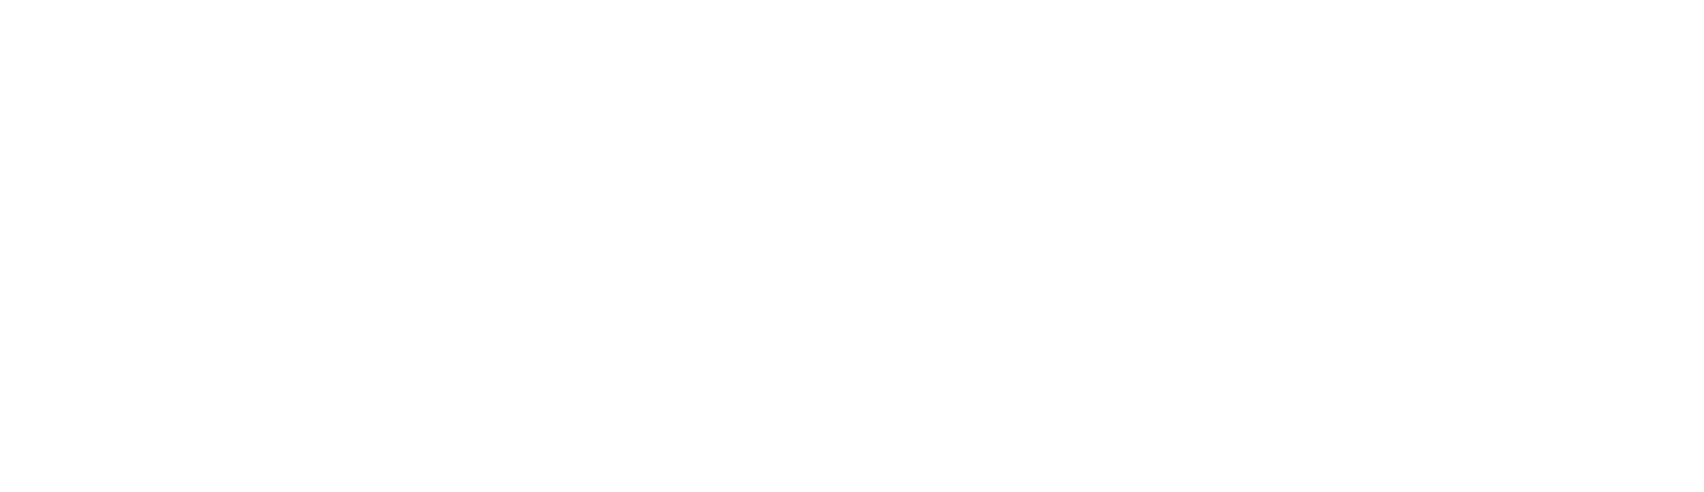 BrandEmbassy Logo